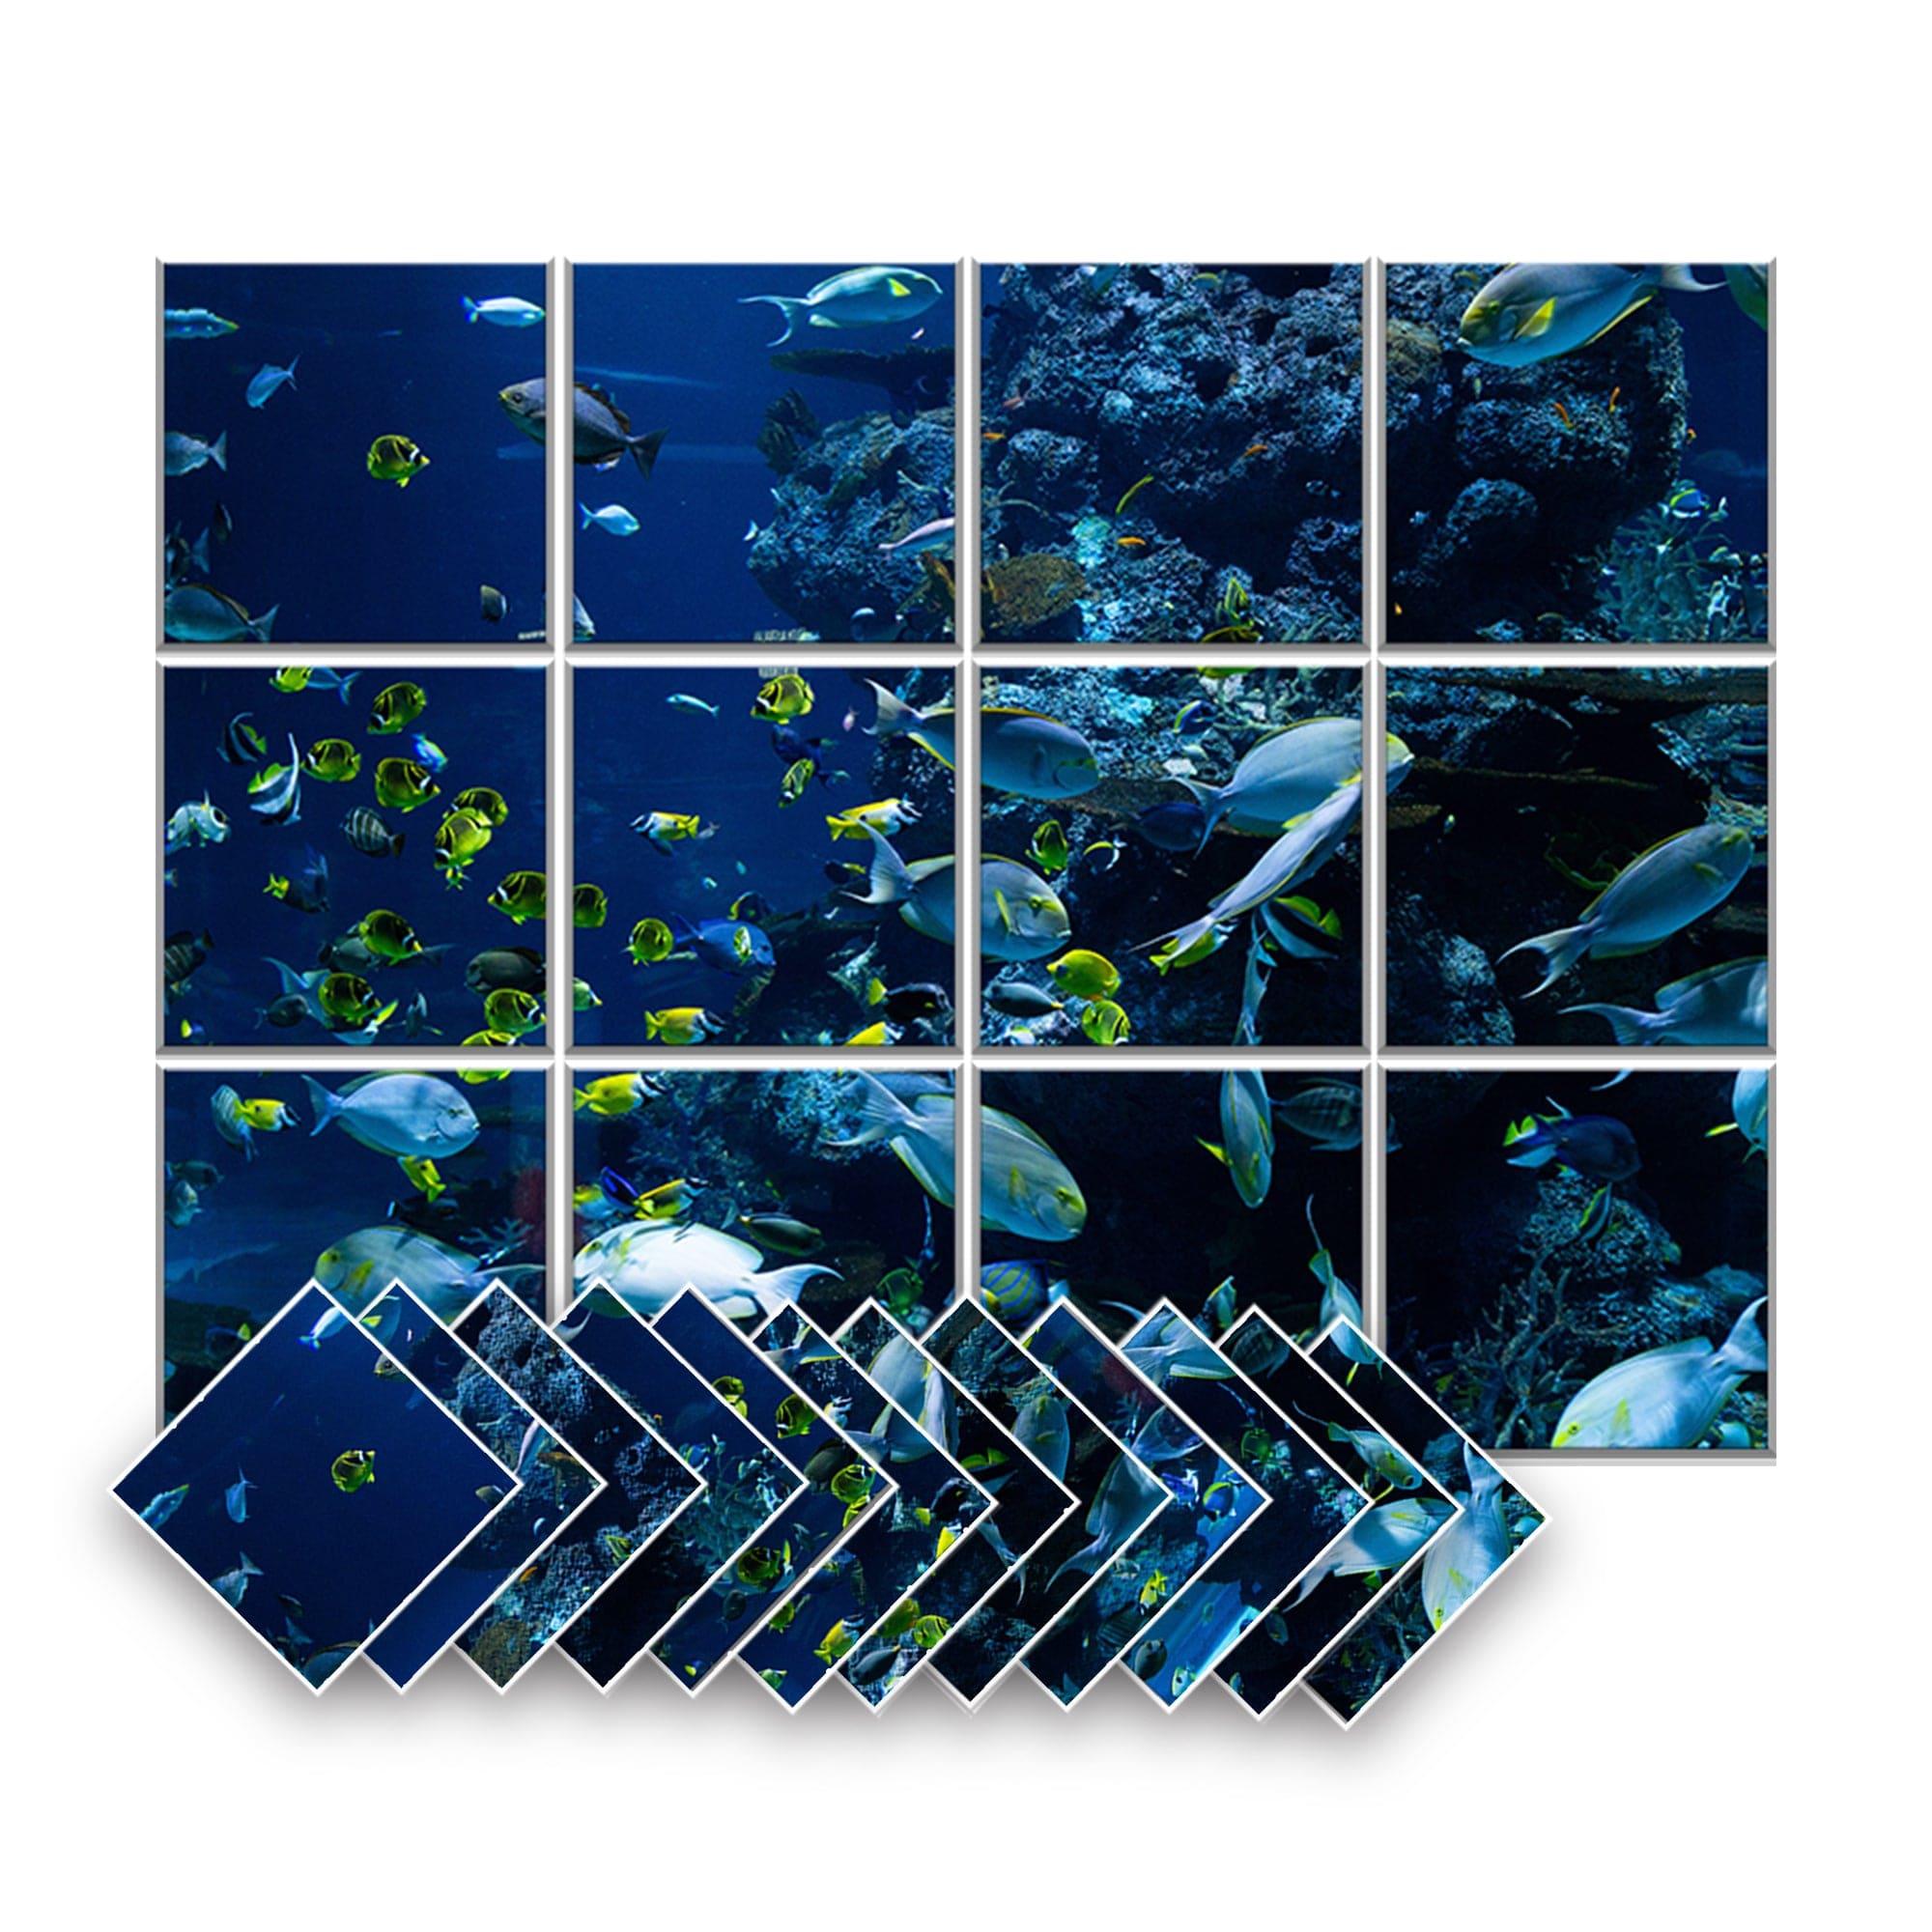 Arrowzoom Aquarium Self-Adhesive Felt Art Wall Panels - KK1402 Design C / 12 Pieces - 120 x 90 cm / 47.2 x 35.4 in